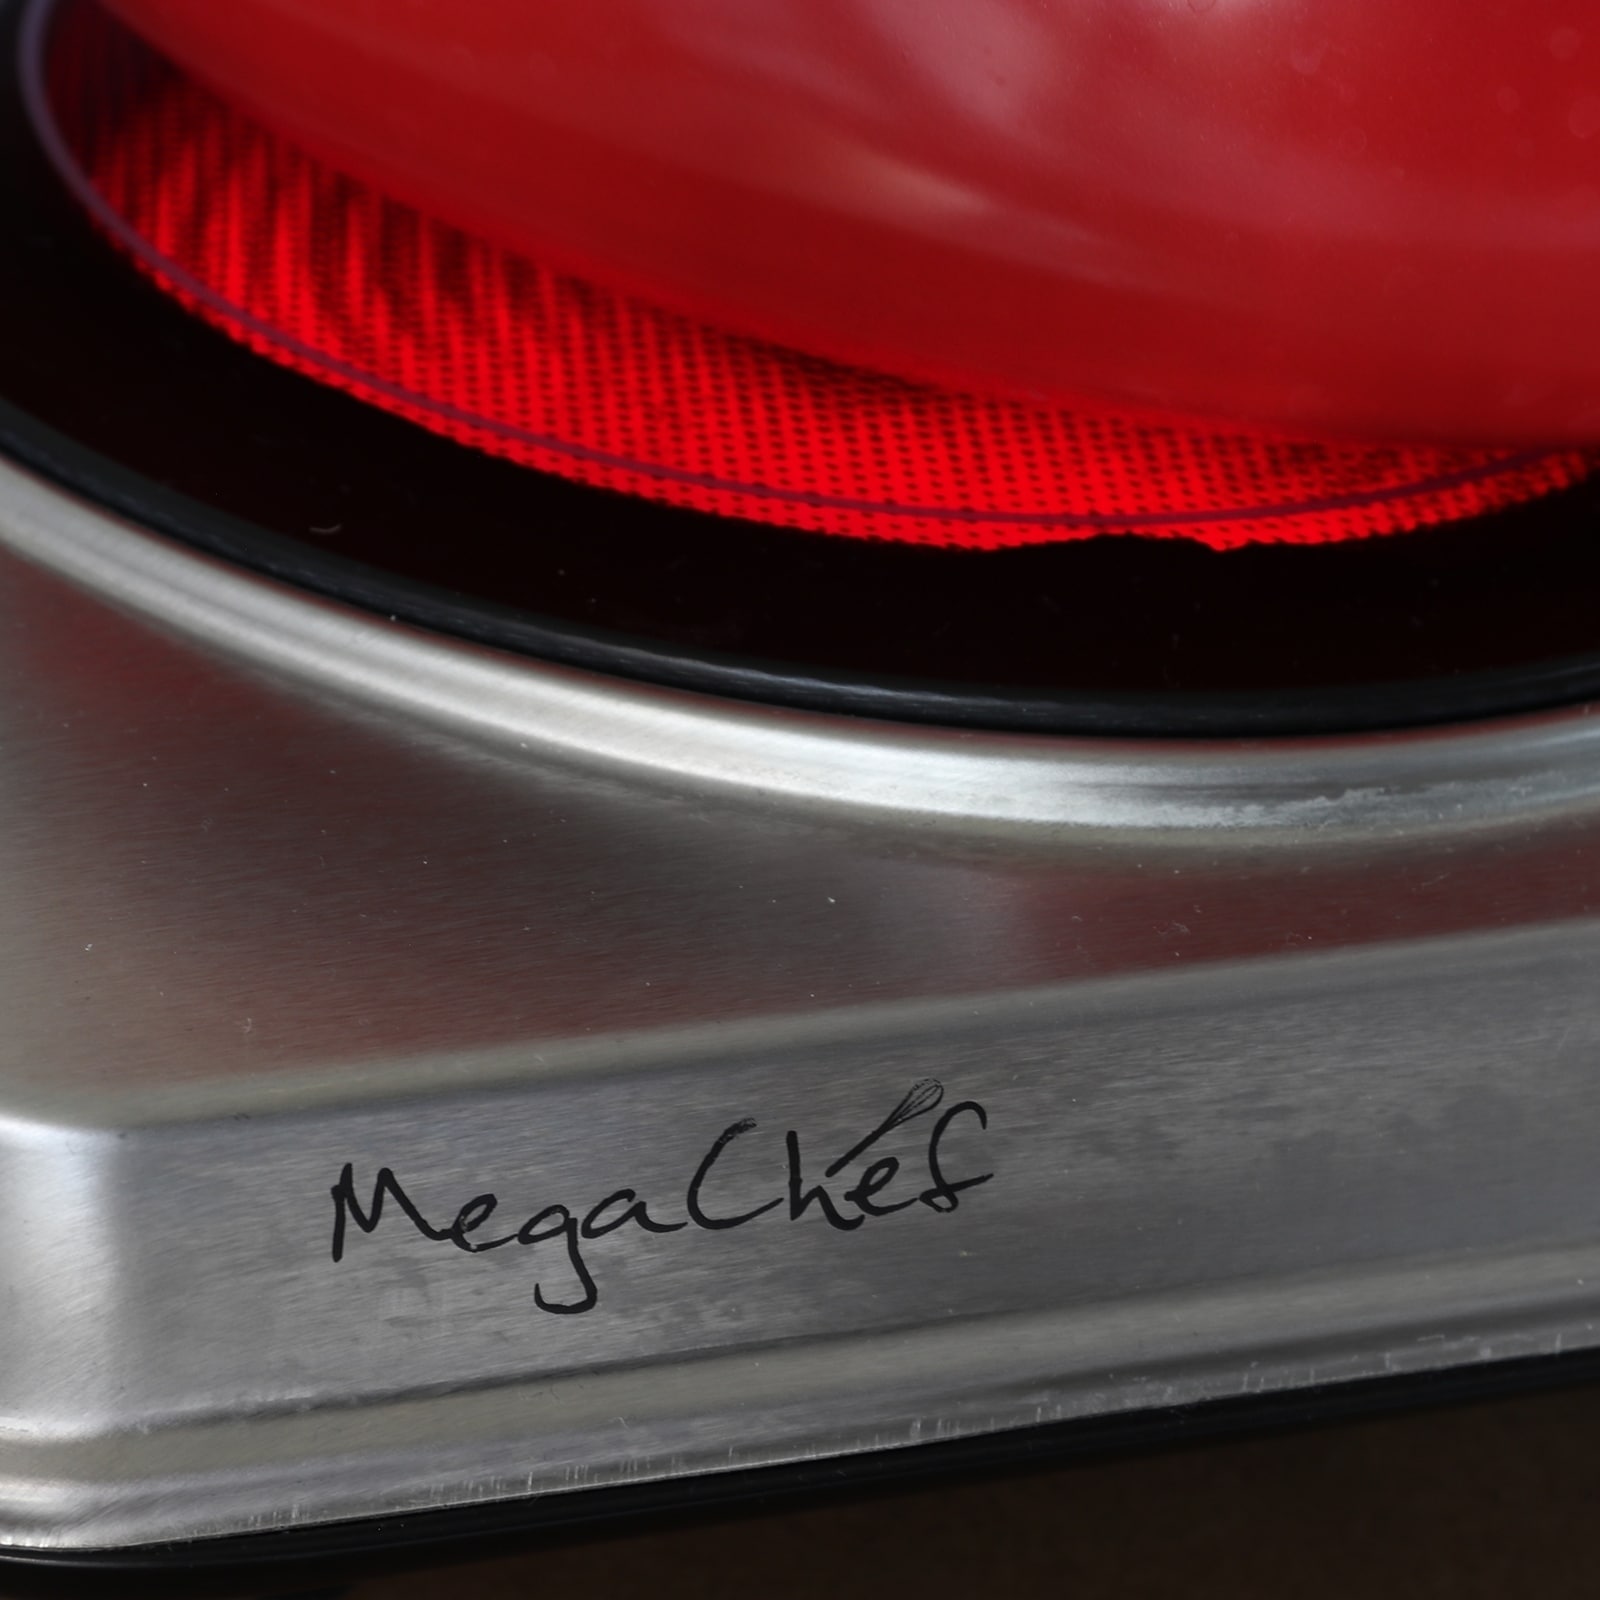 Megachef Infrared Dual Cook Top Electric Burner